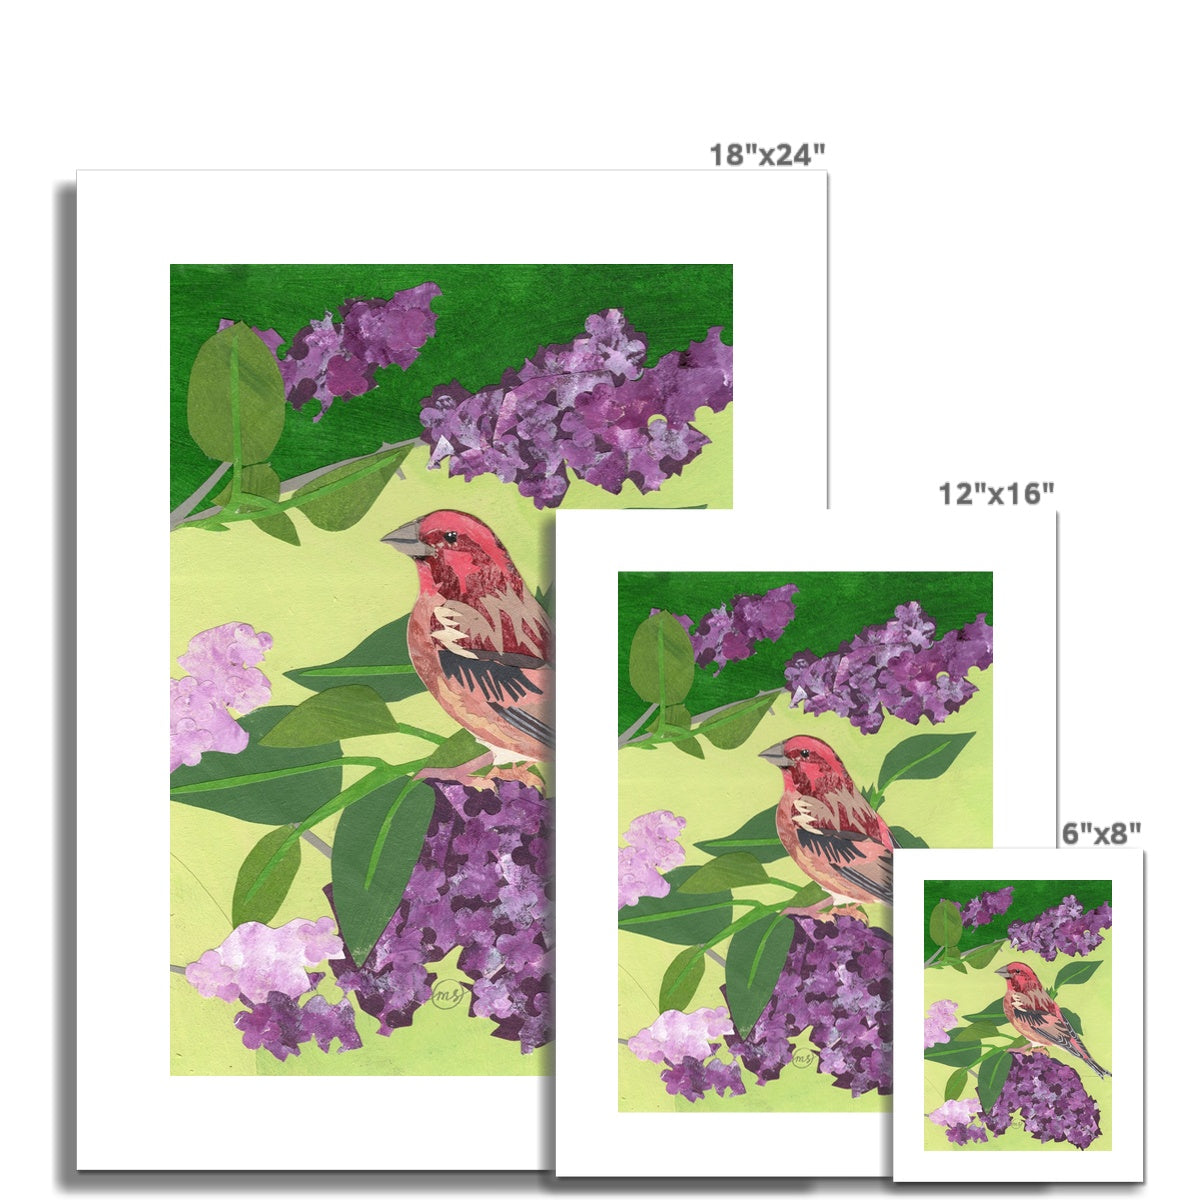 Lilac Purple Finch